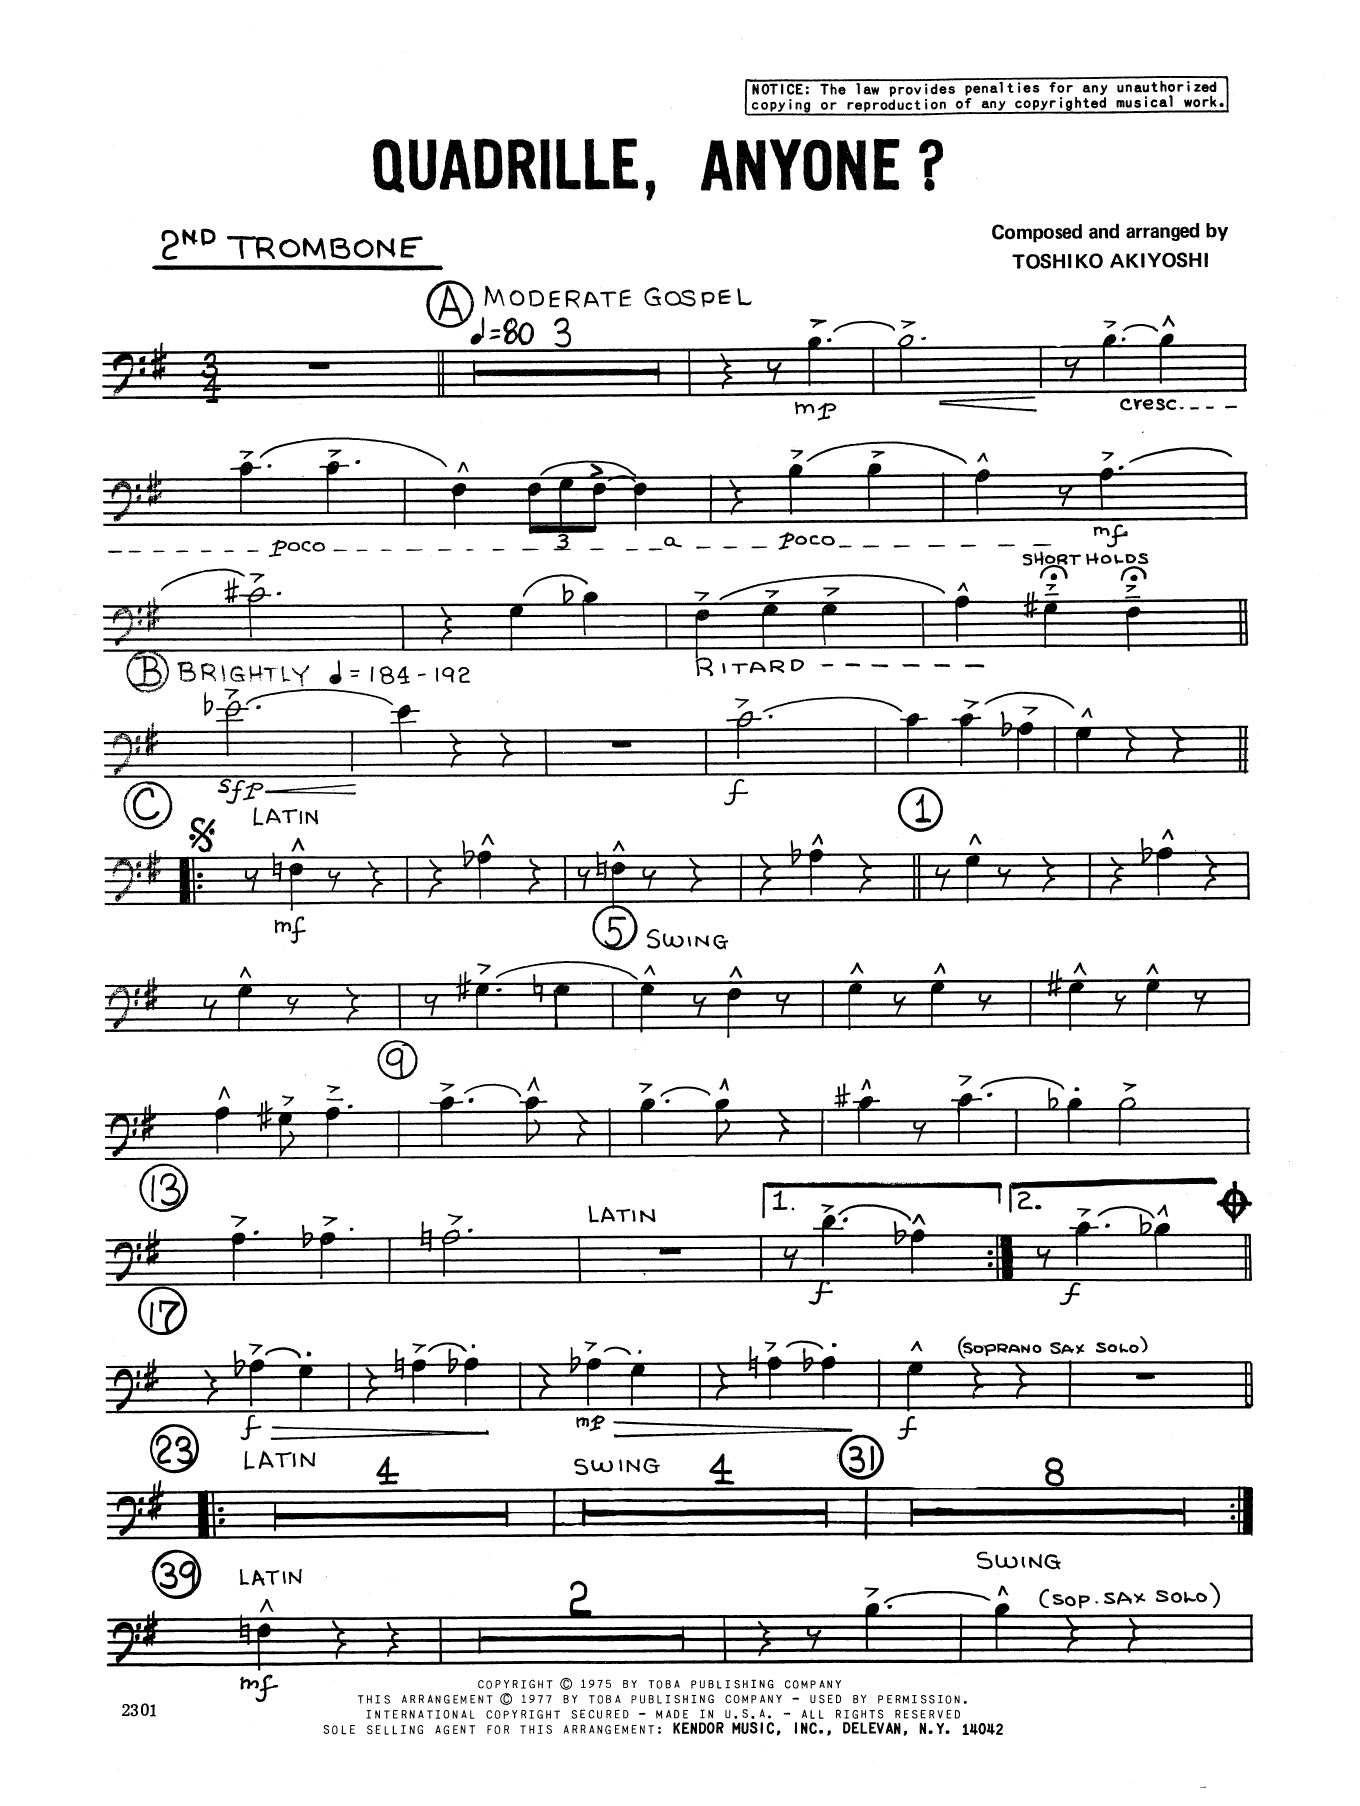 Download Toshiko Akiyoshi Quadrille, Anyone? - 2nd Trombone Sheet Music